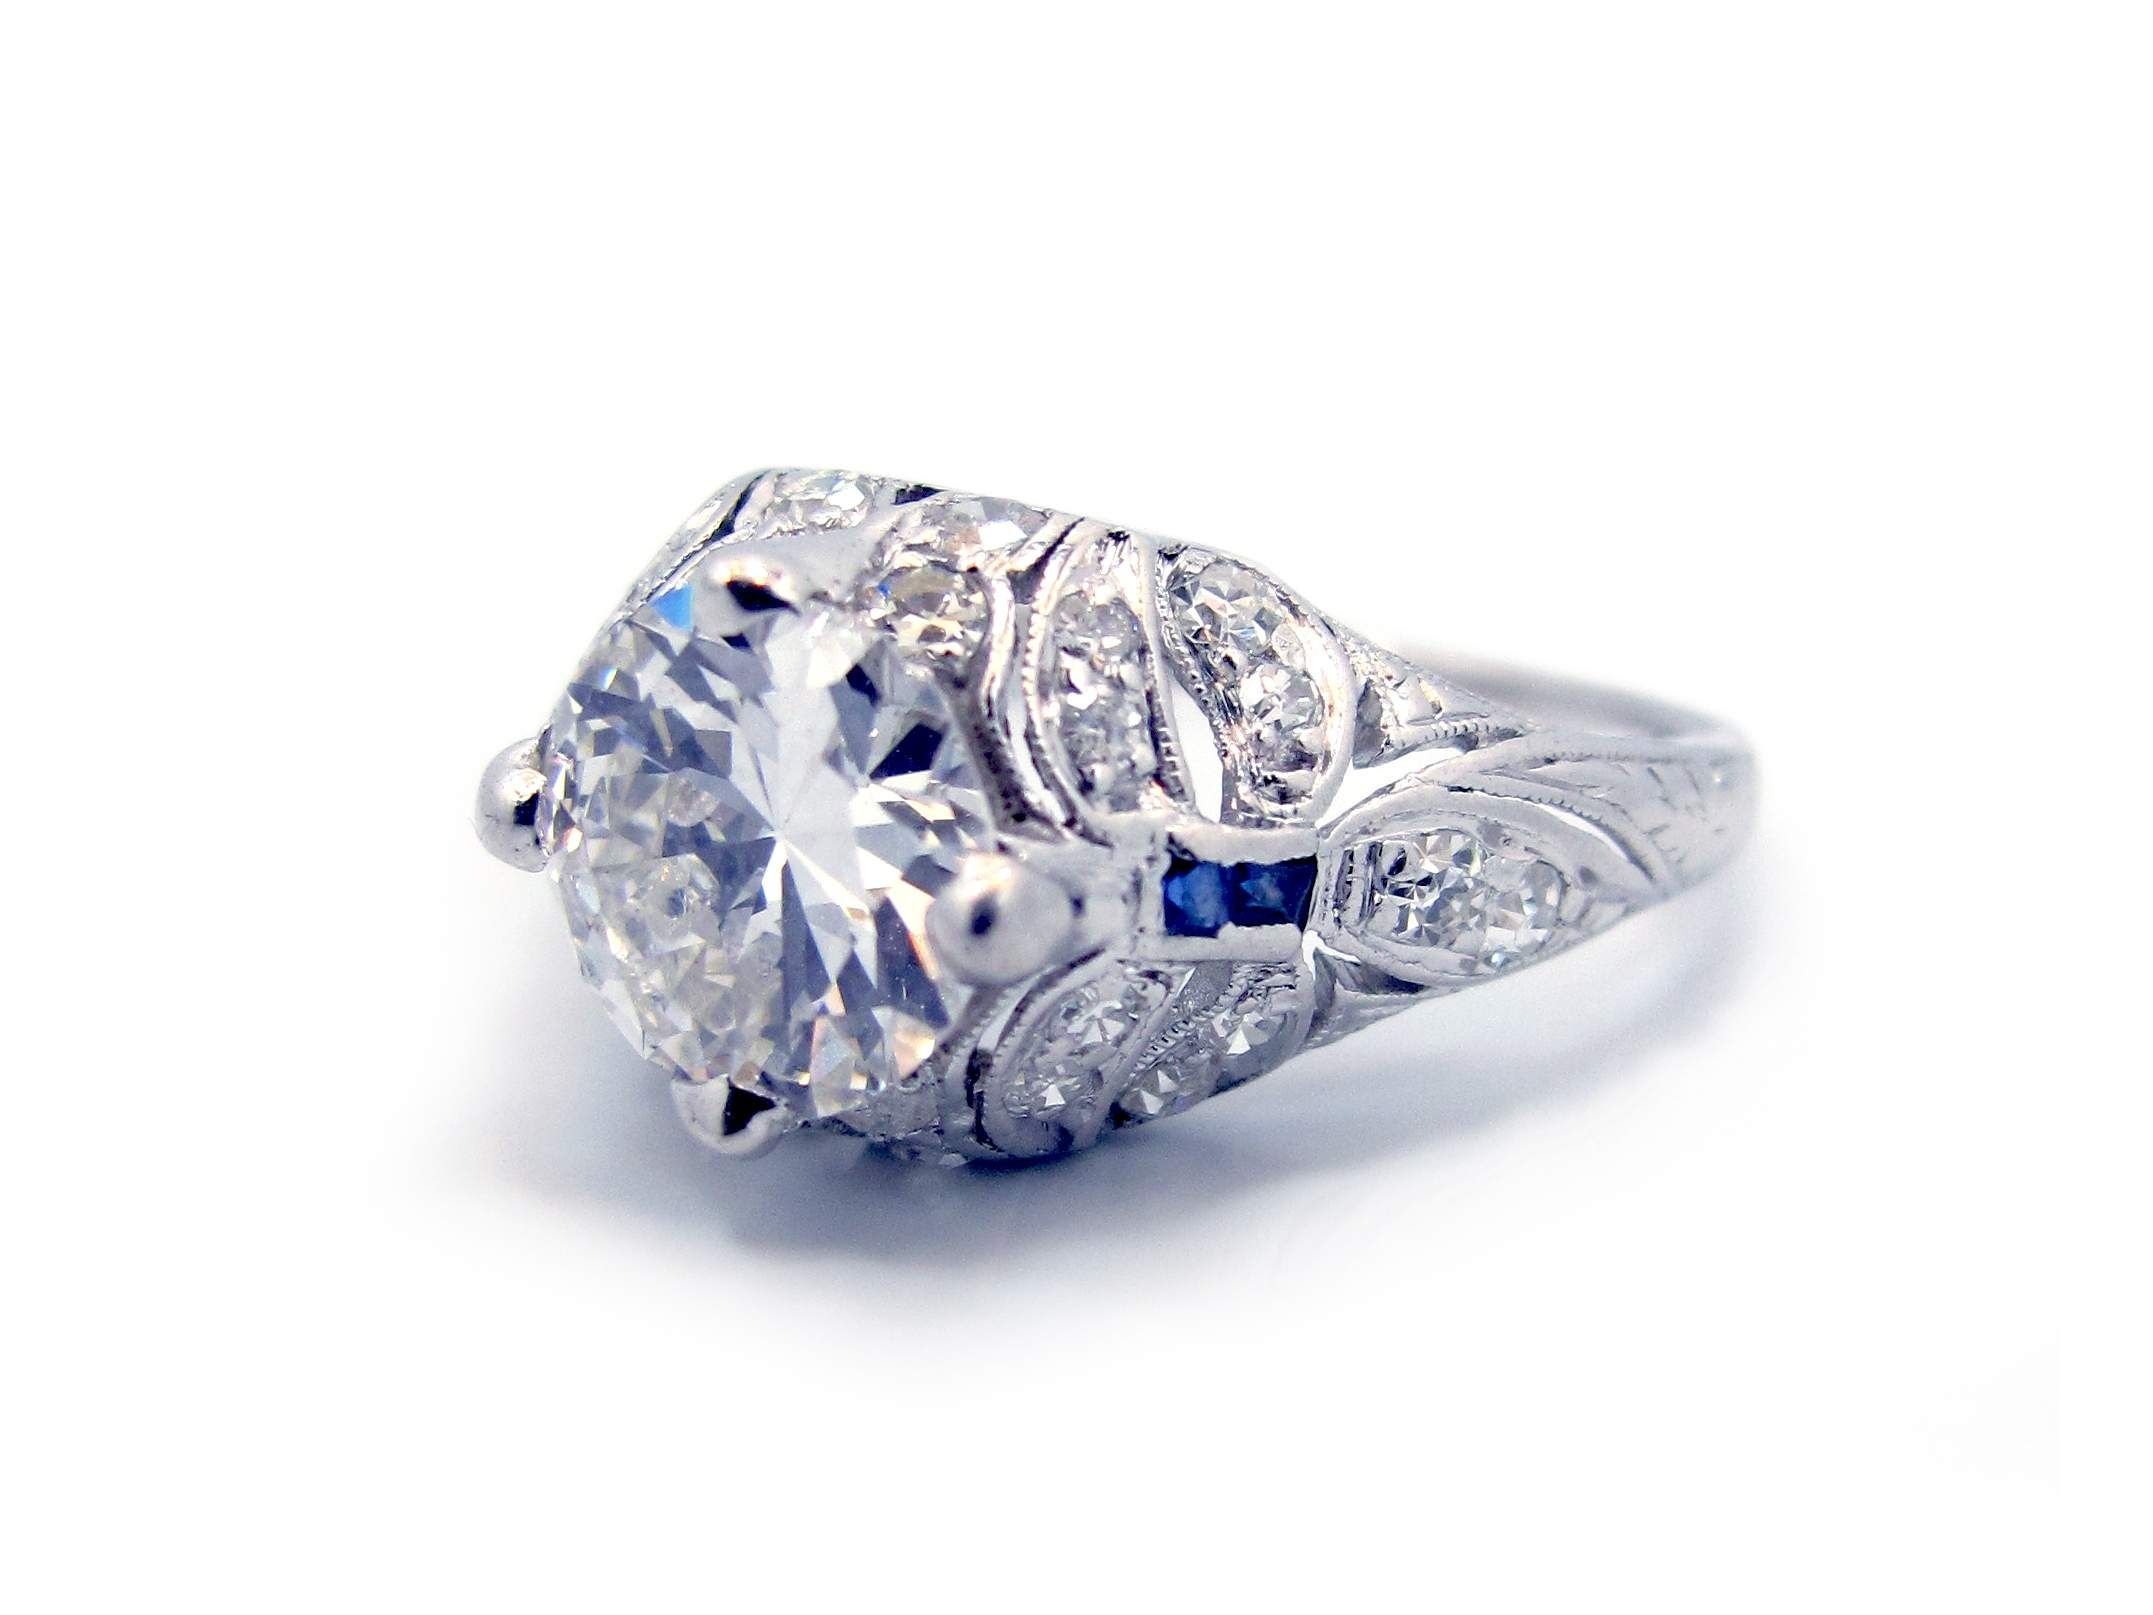 Vintage Inspired Platinum Diamond And Sapphire Engagement Ring Regarding Most Current Vintage Style Diamond And Sapphire Engagement Rings (View 3 of 15)